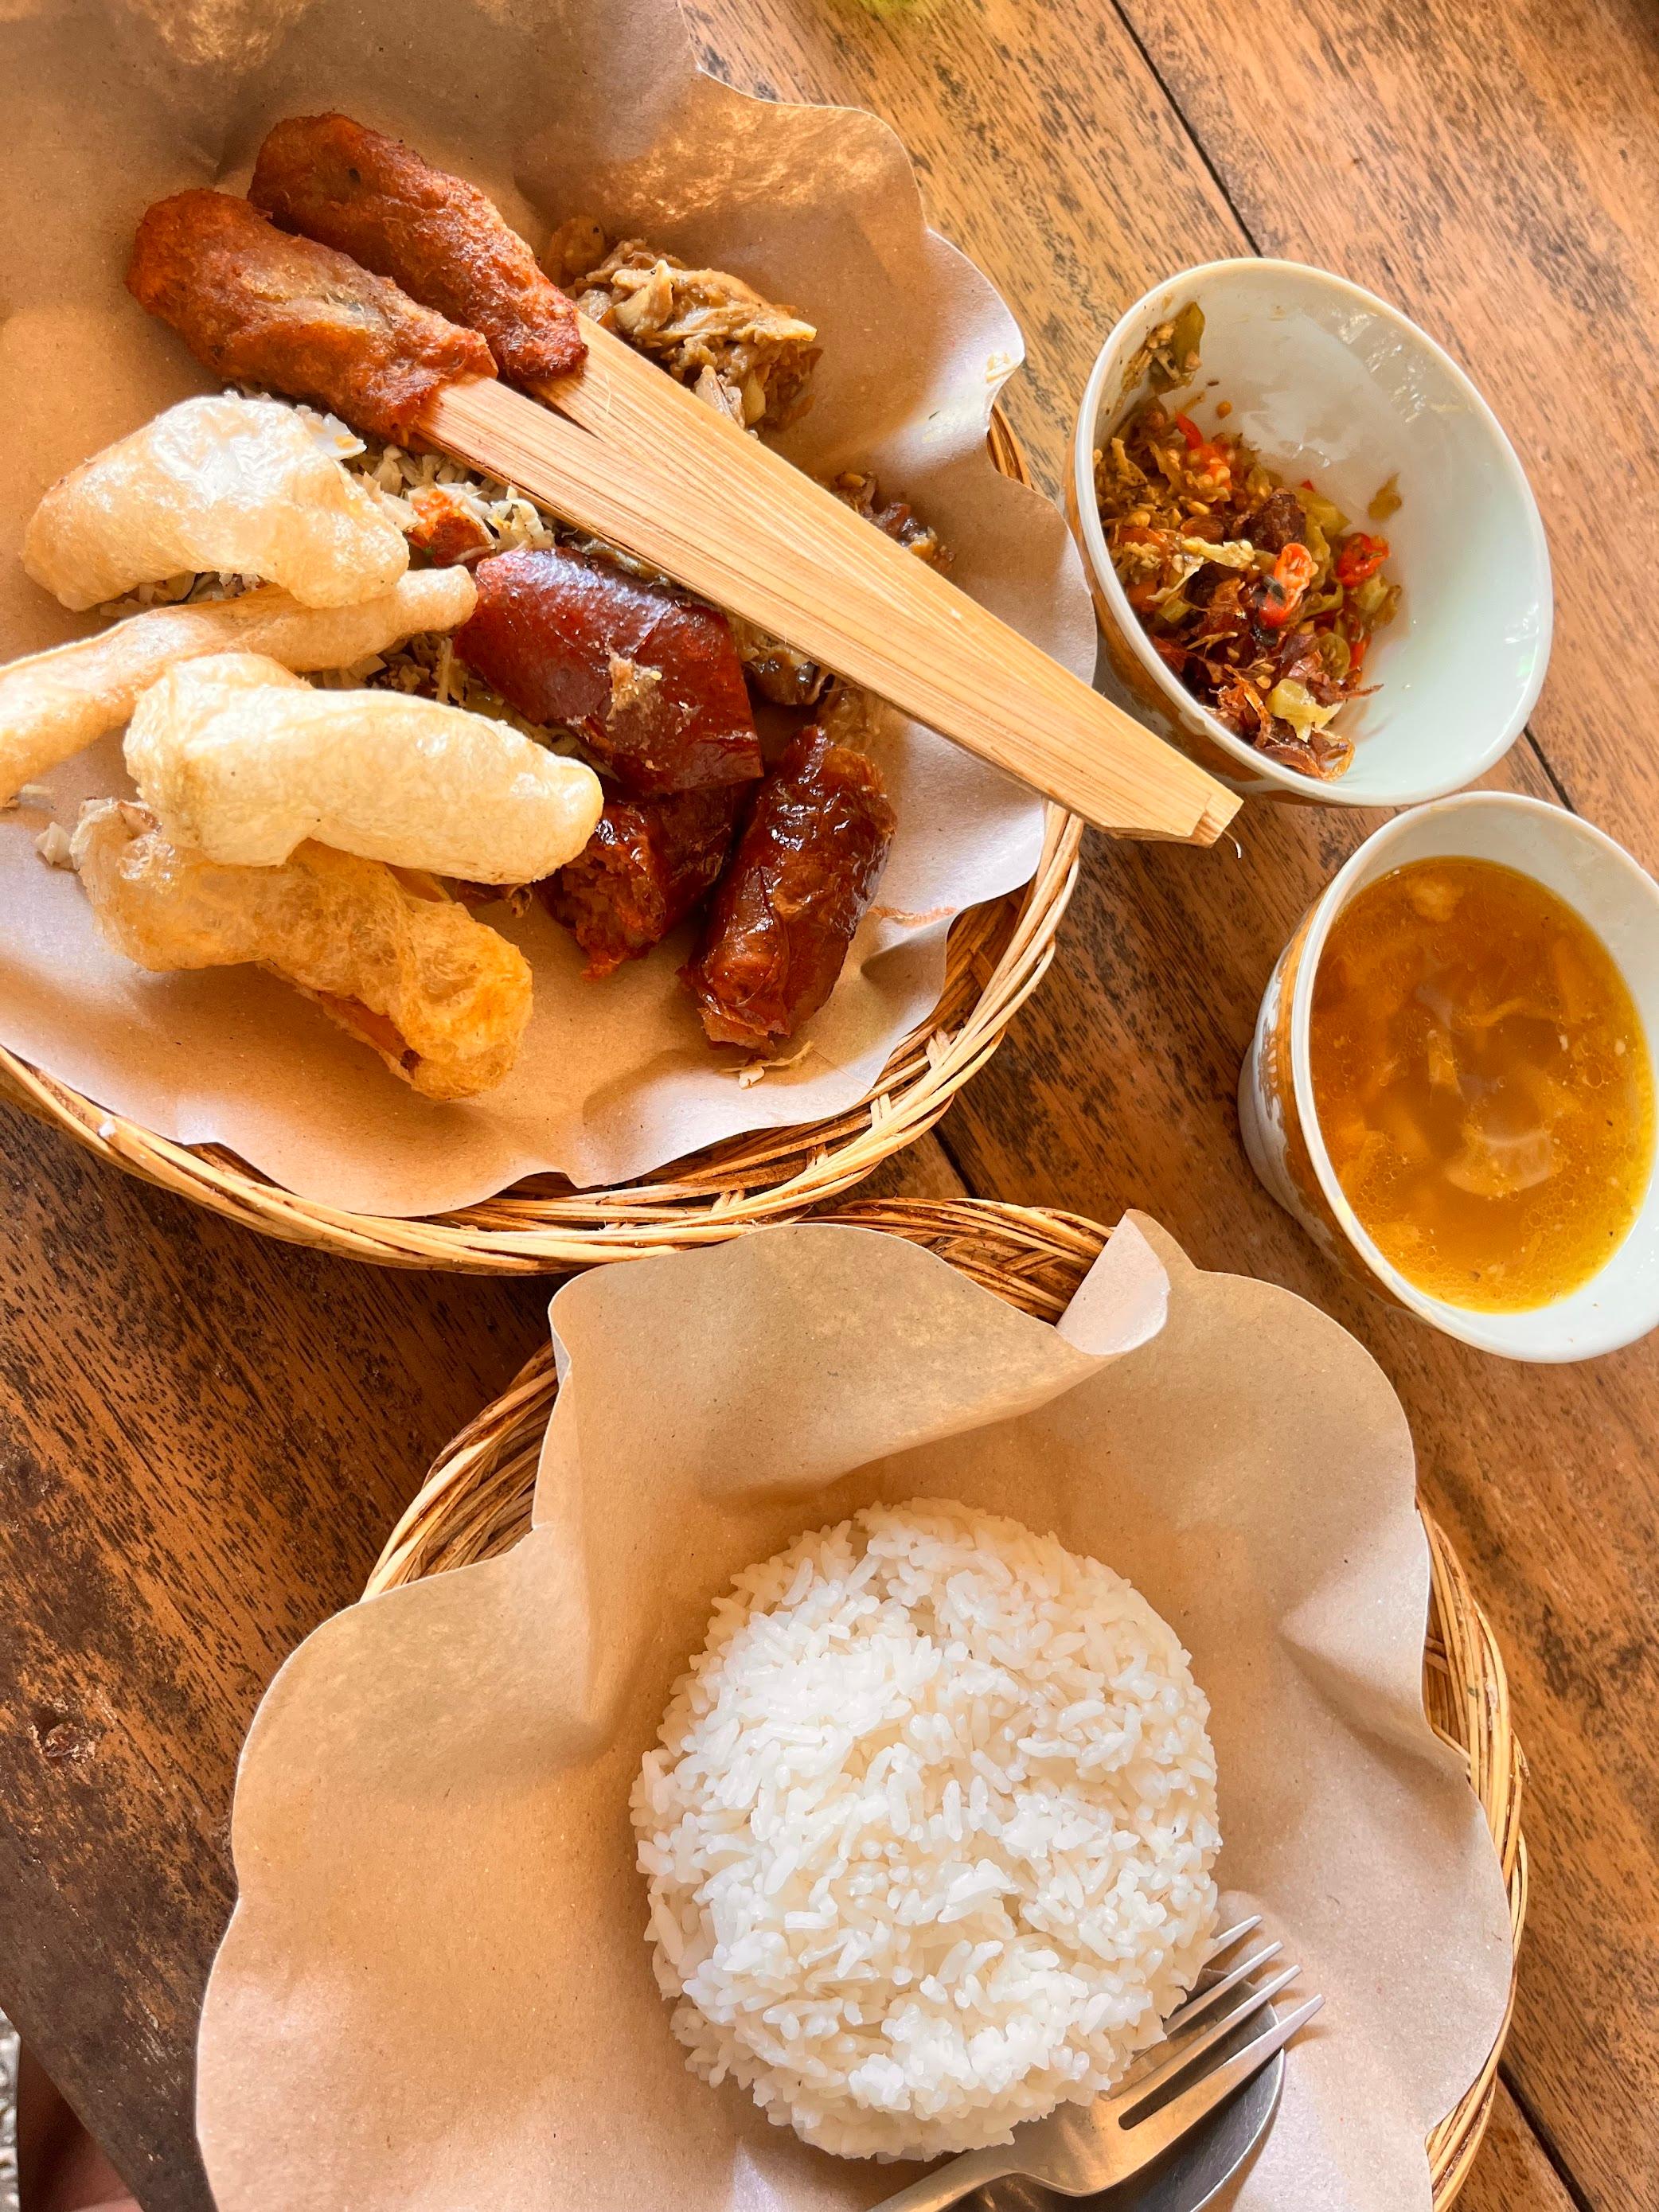 Warung Made (Traditional Food) Babi Genyol review